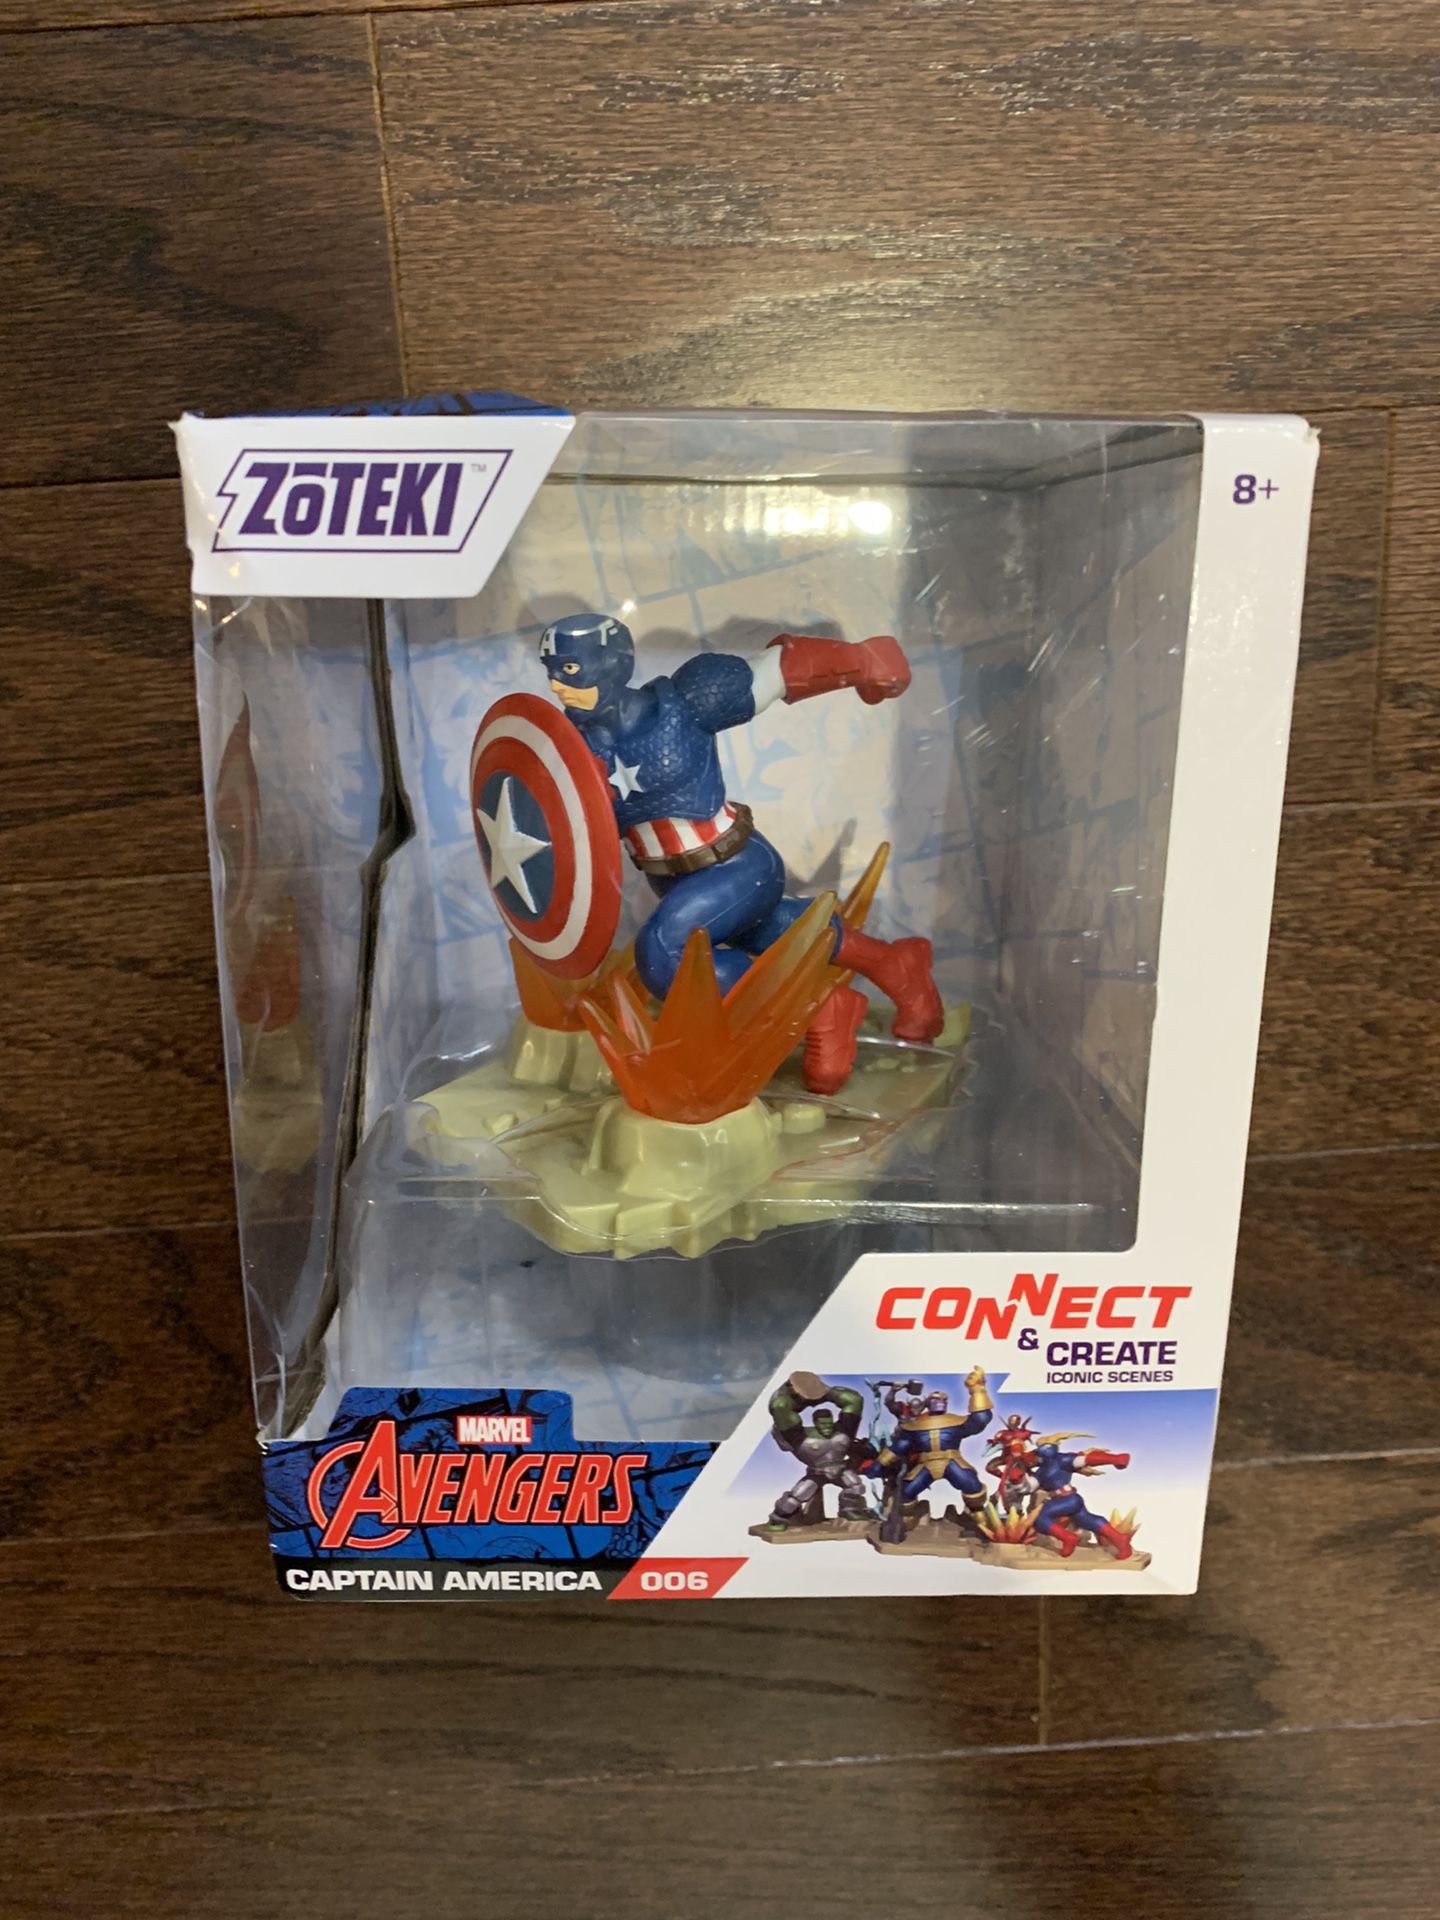 Zoteki Connect & Create Diorama Marvel Avengers CAPTAIN AMERICA NIB MINT RARE!!